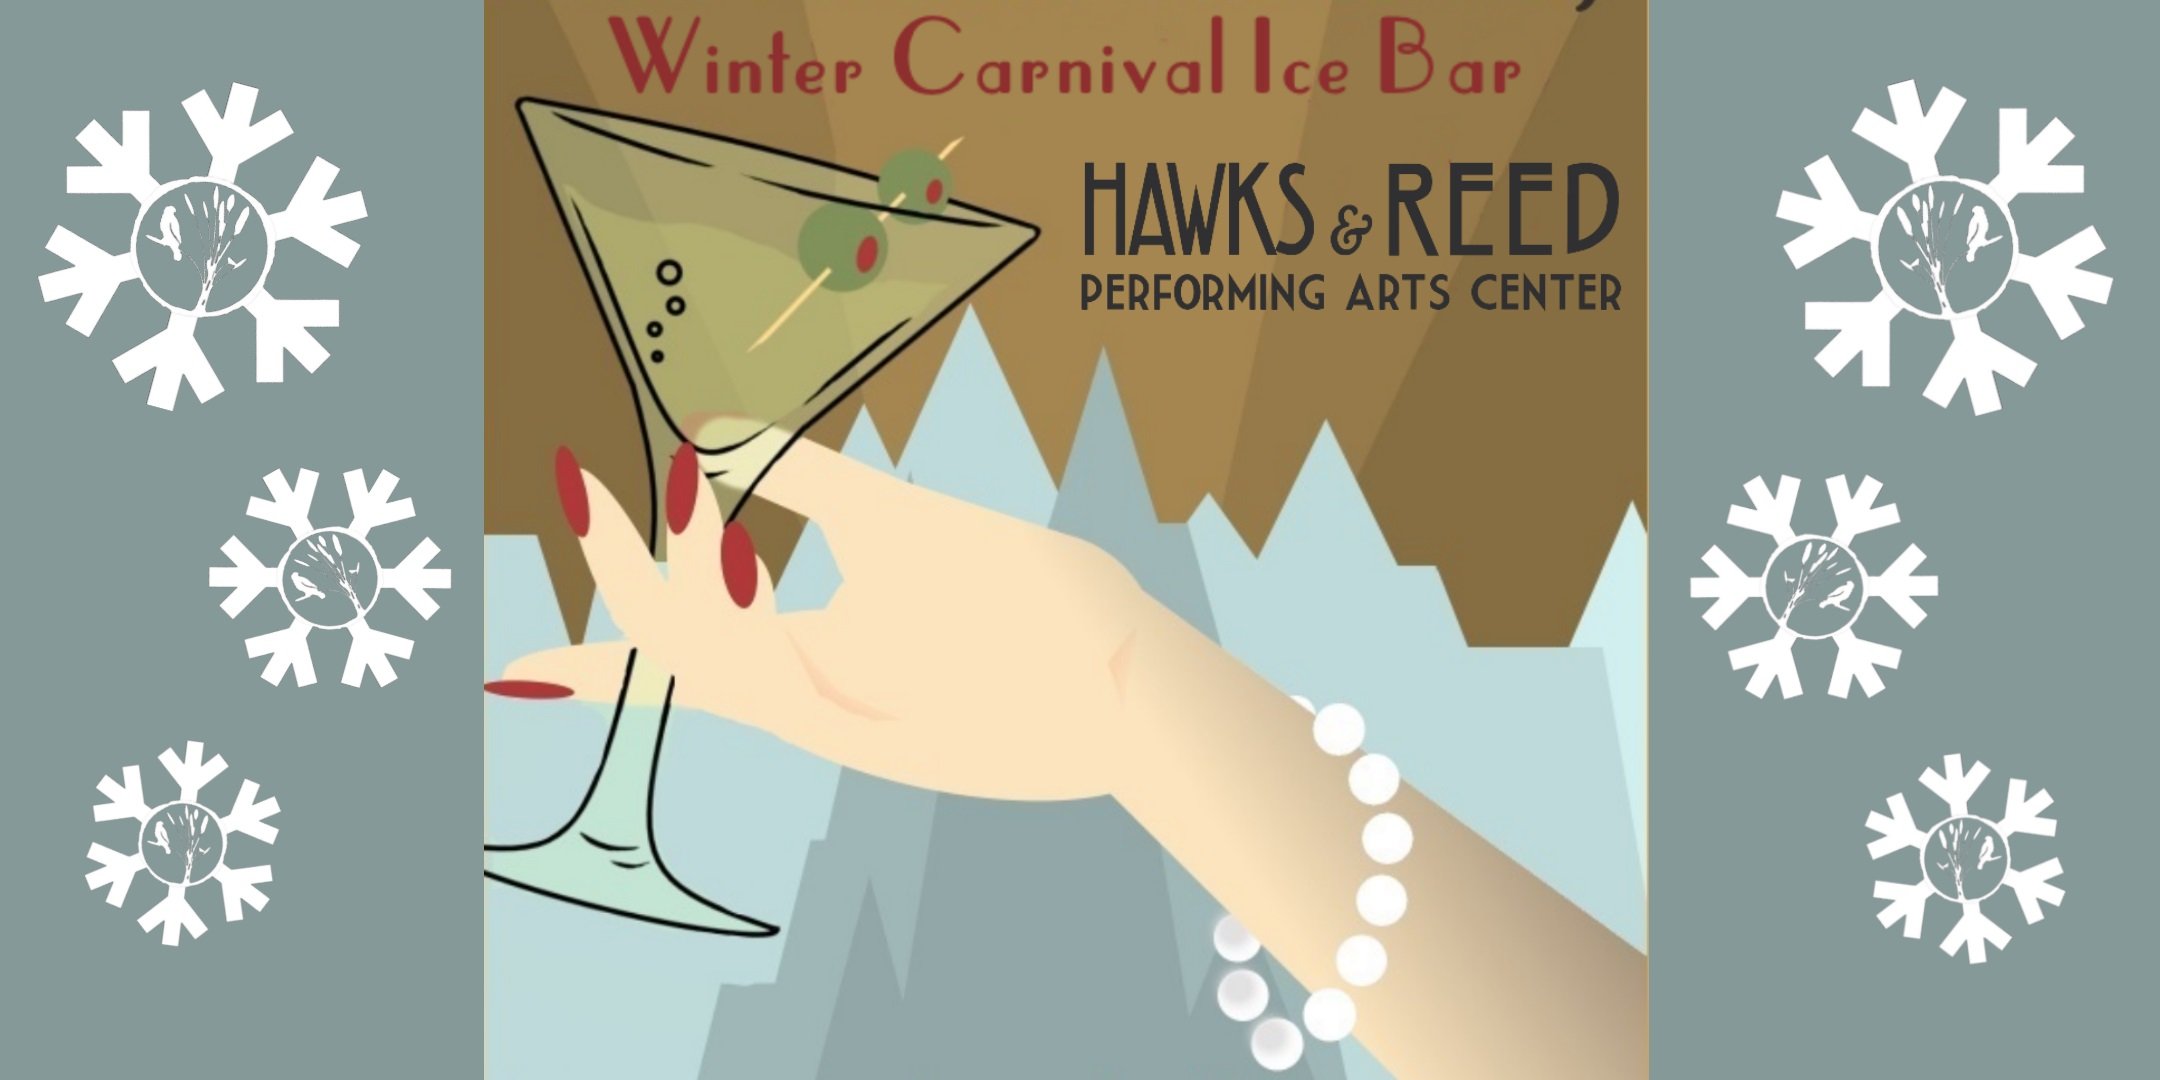 Winter Carnival: Ice Bar at Hawks & Reed